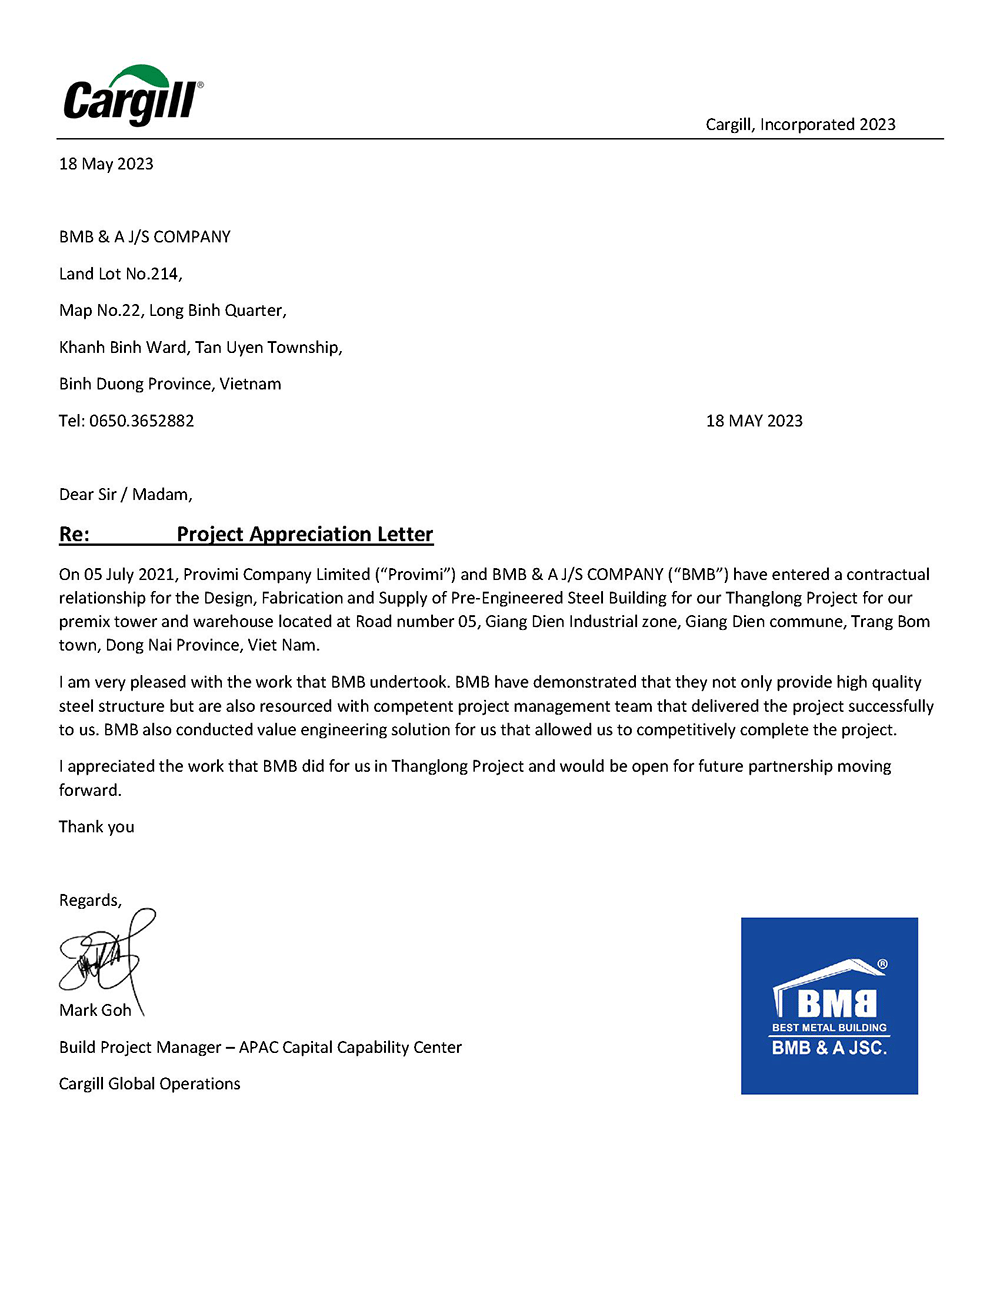 Appreciation letter from Provimi Co.Ltd (Cargill Viet Nam)